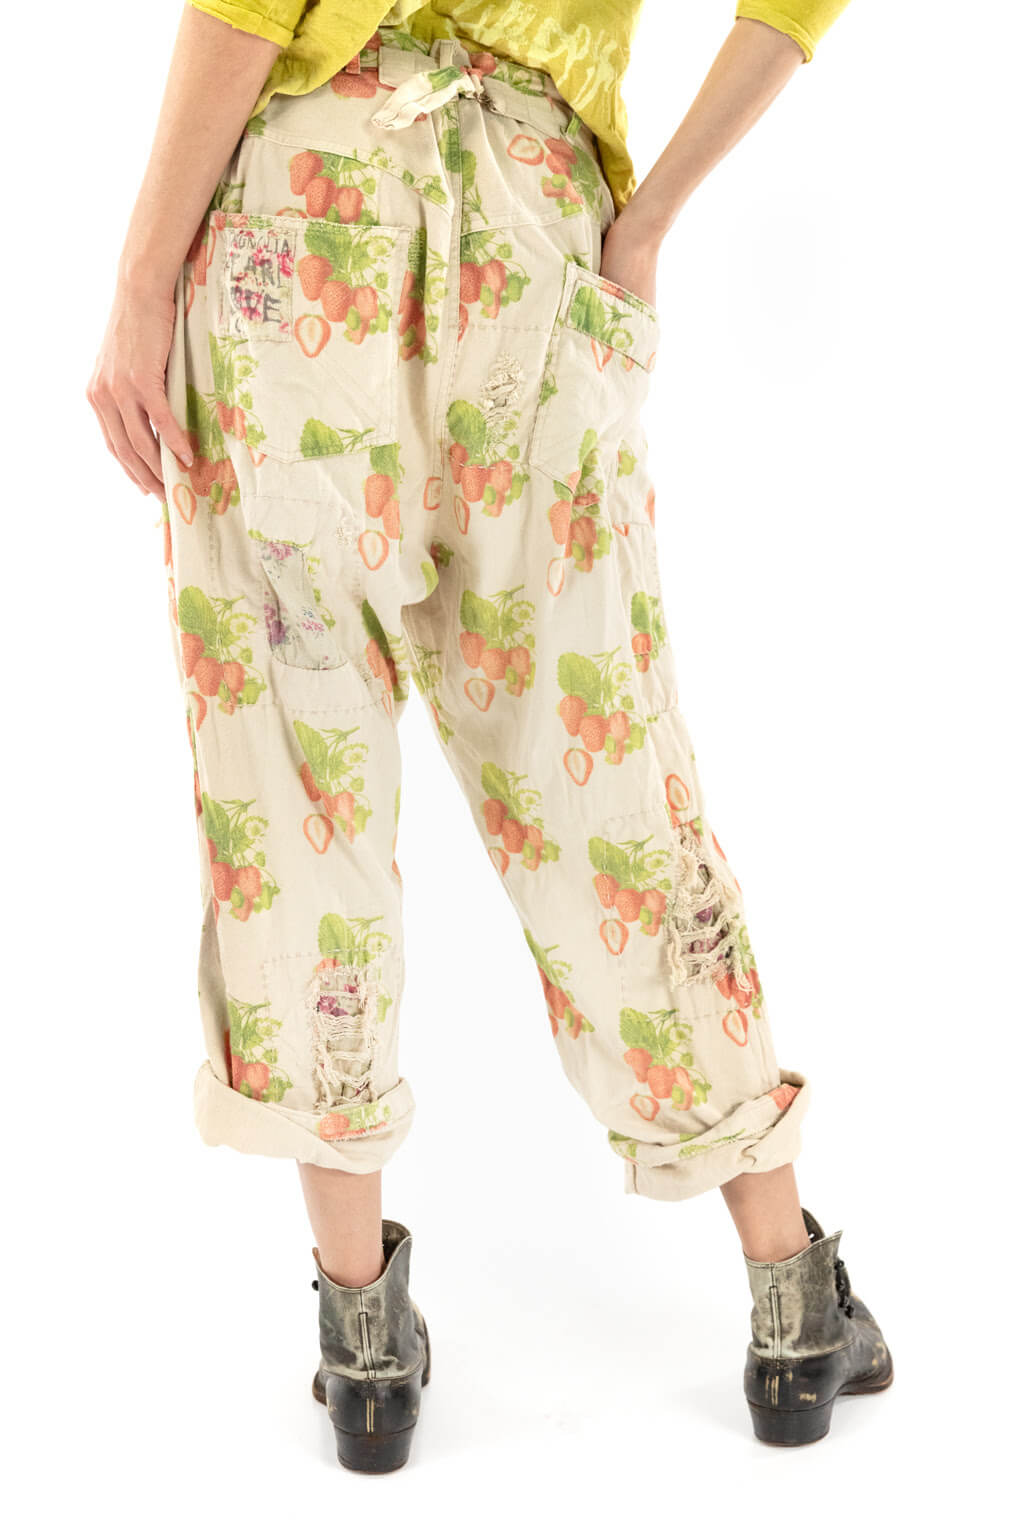 Magnolia Pearl Bobbie Trousers – DetailsDirect